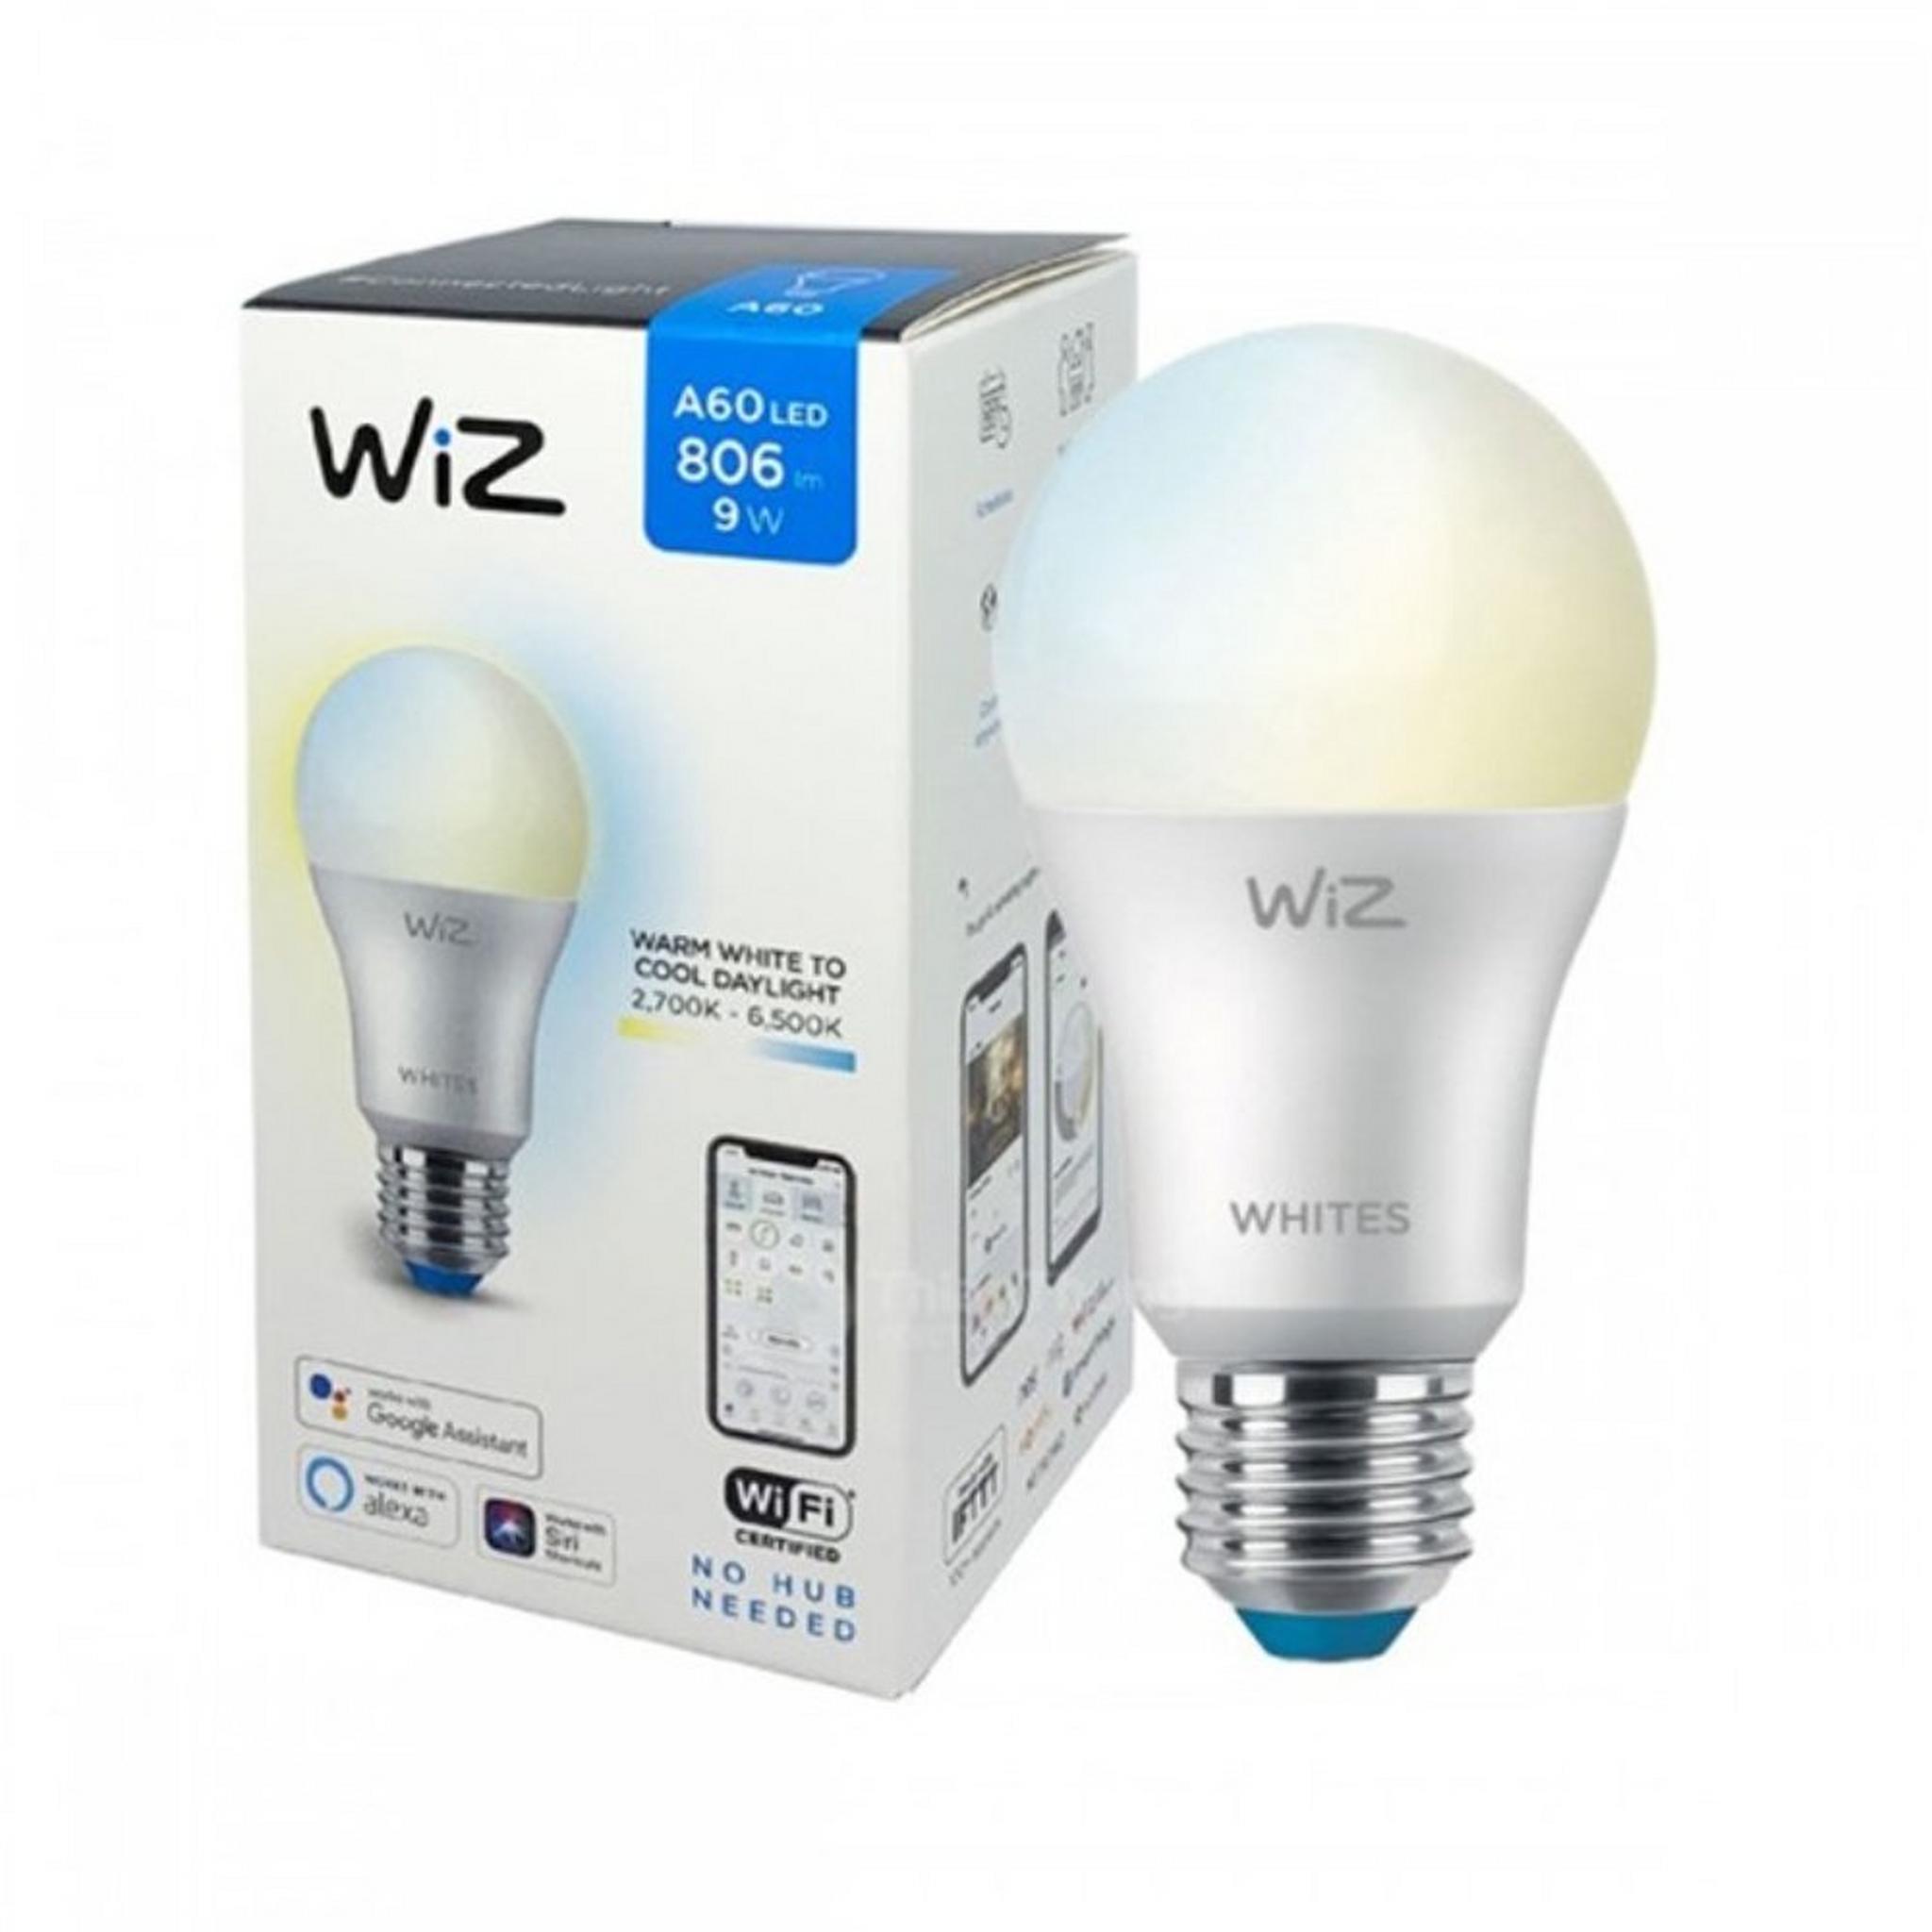 Philips Wiz Wi-Fi LED Smart Bulb